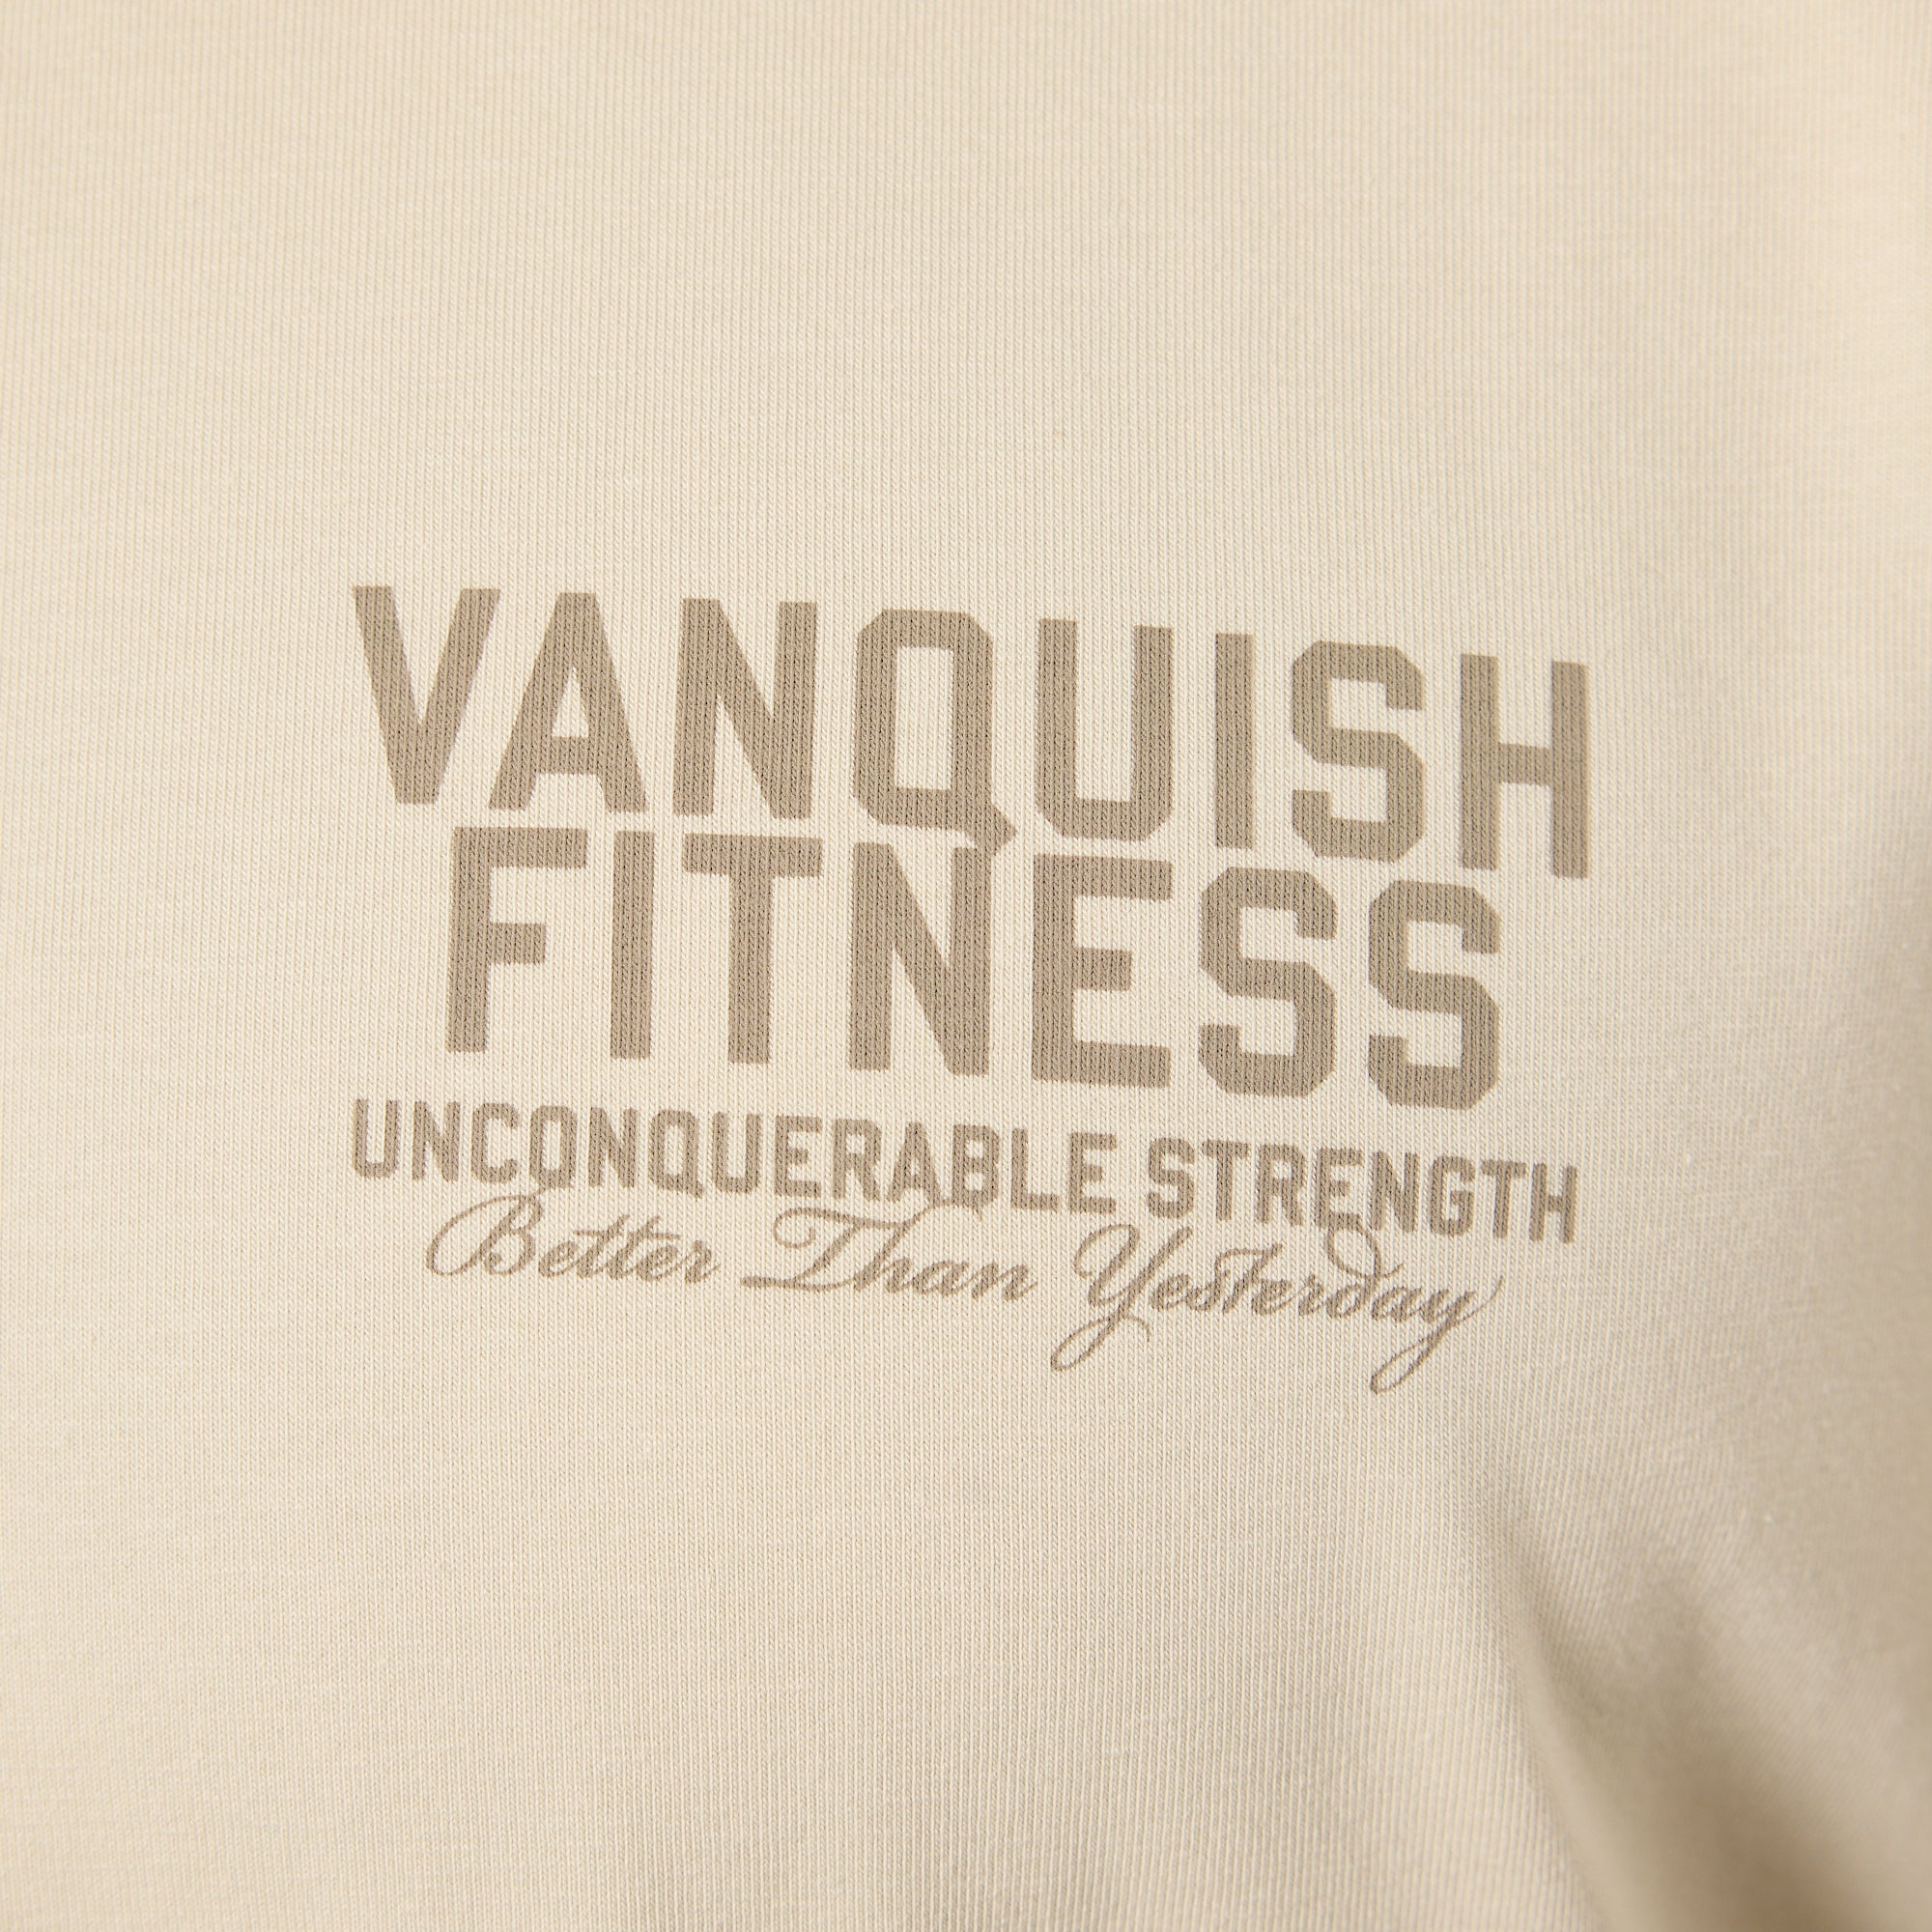 Vanquish TSP Unconquerable Strength Vintage White Oversized T Shirt